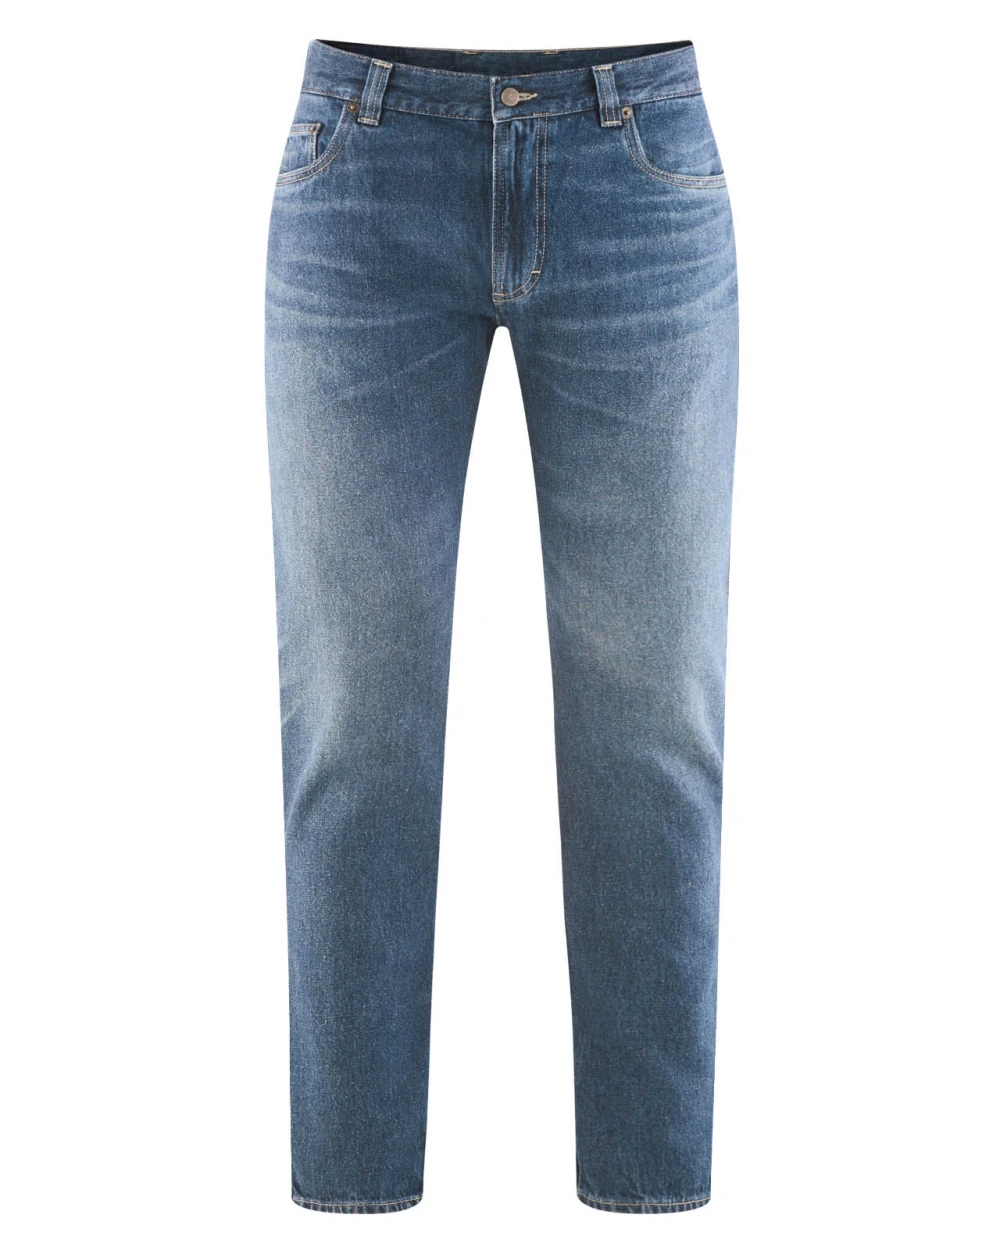 Men's Blue Denim Laser Jeans in hemp and organic cotton